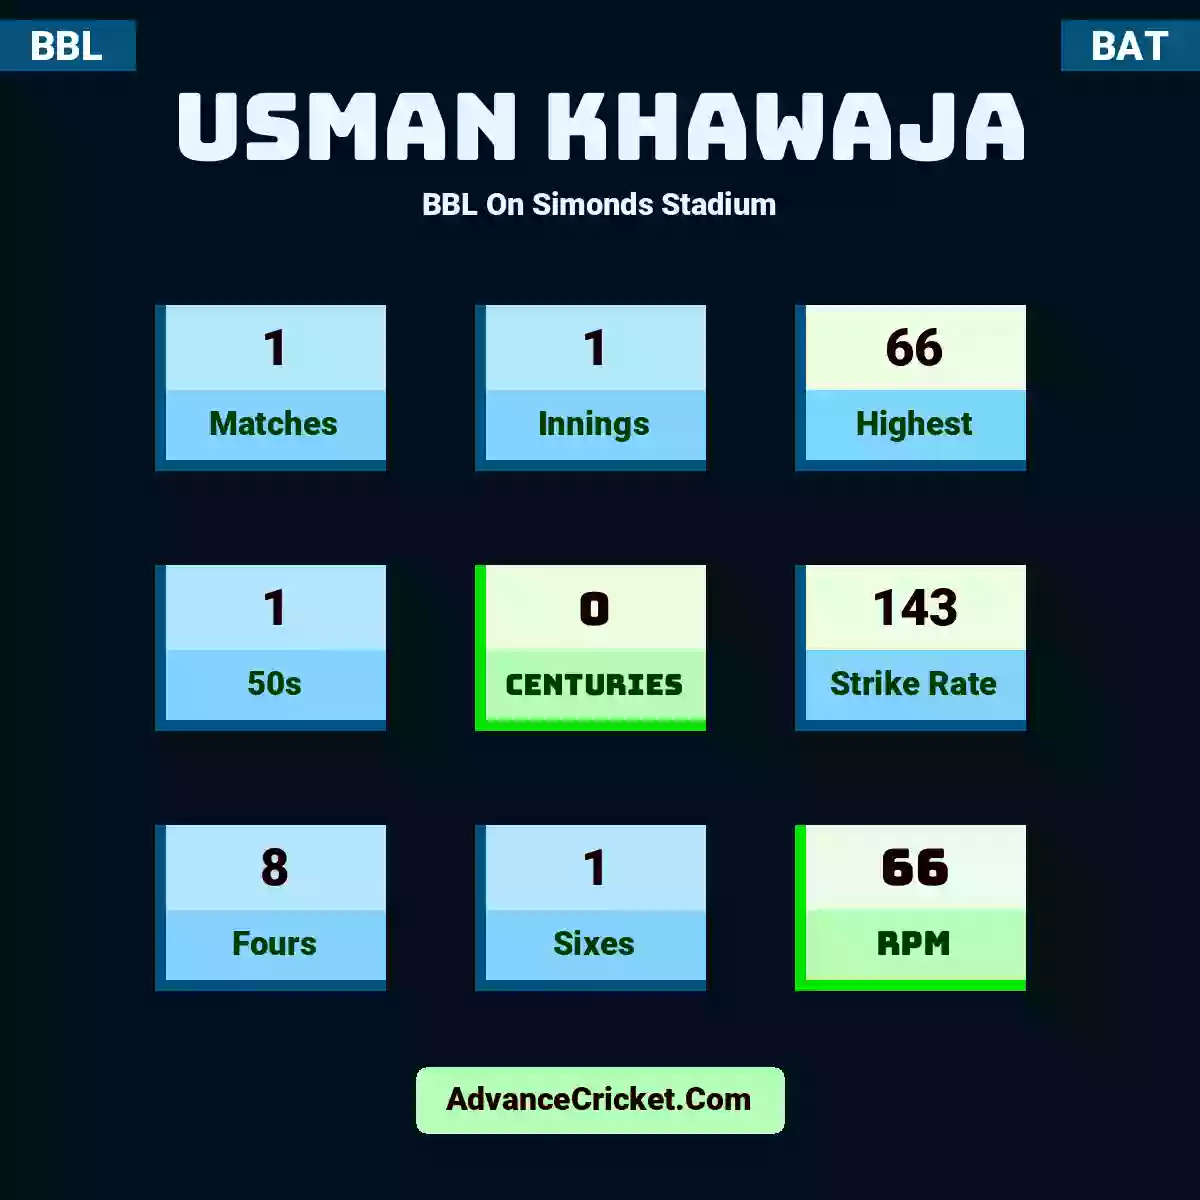 Usman Khawaja BBL  On Simonds Stadium, Usman Khawaja played 1 matches, scored 66 runs as highest, 1 half-centuries, and 0 centuries, with a strike rate of 143. U.Khawaja hit 8 fours and 1 sixes, with an RPM of 66.